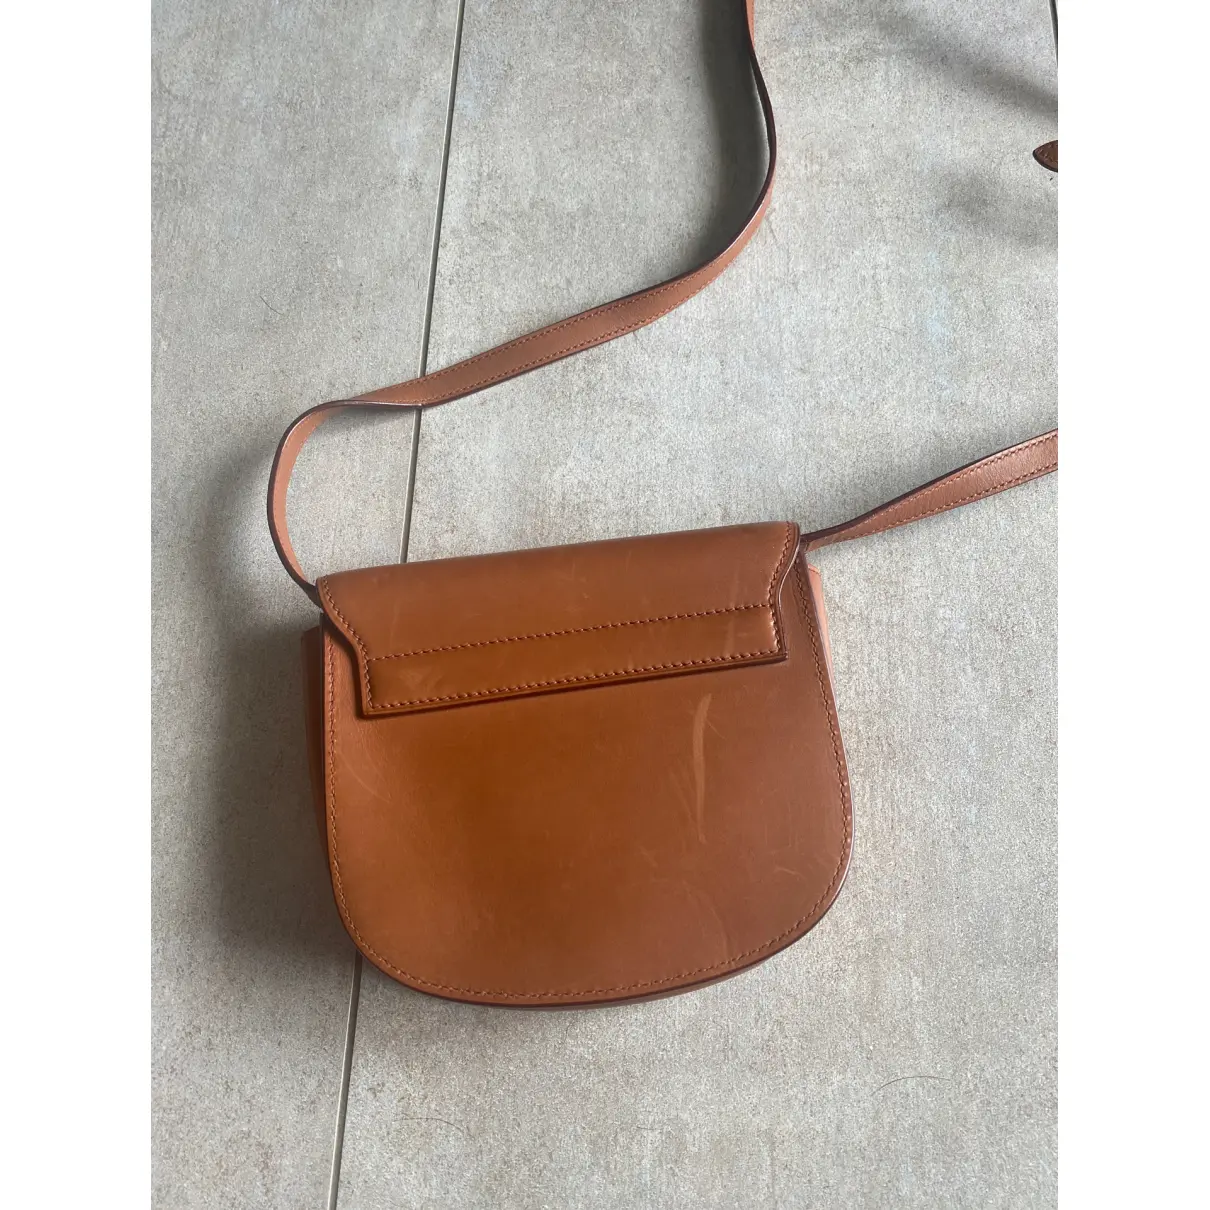 Buy Saint Laurent Kaia leather crossbody bag online